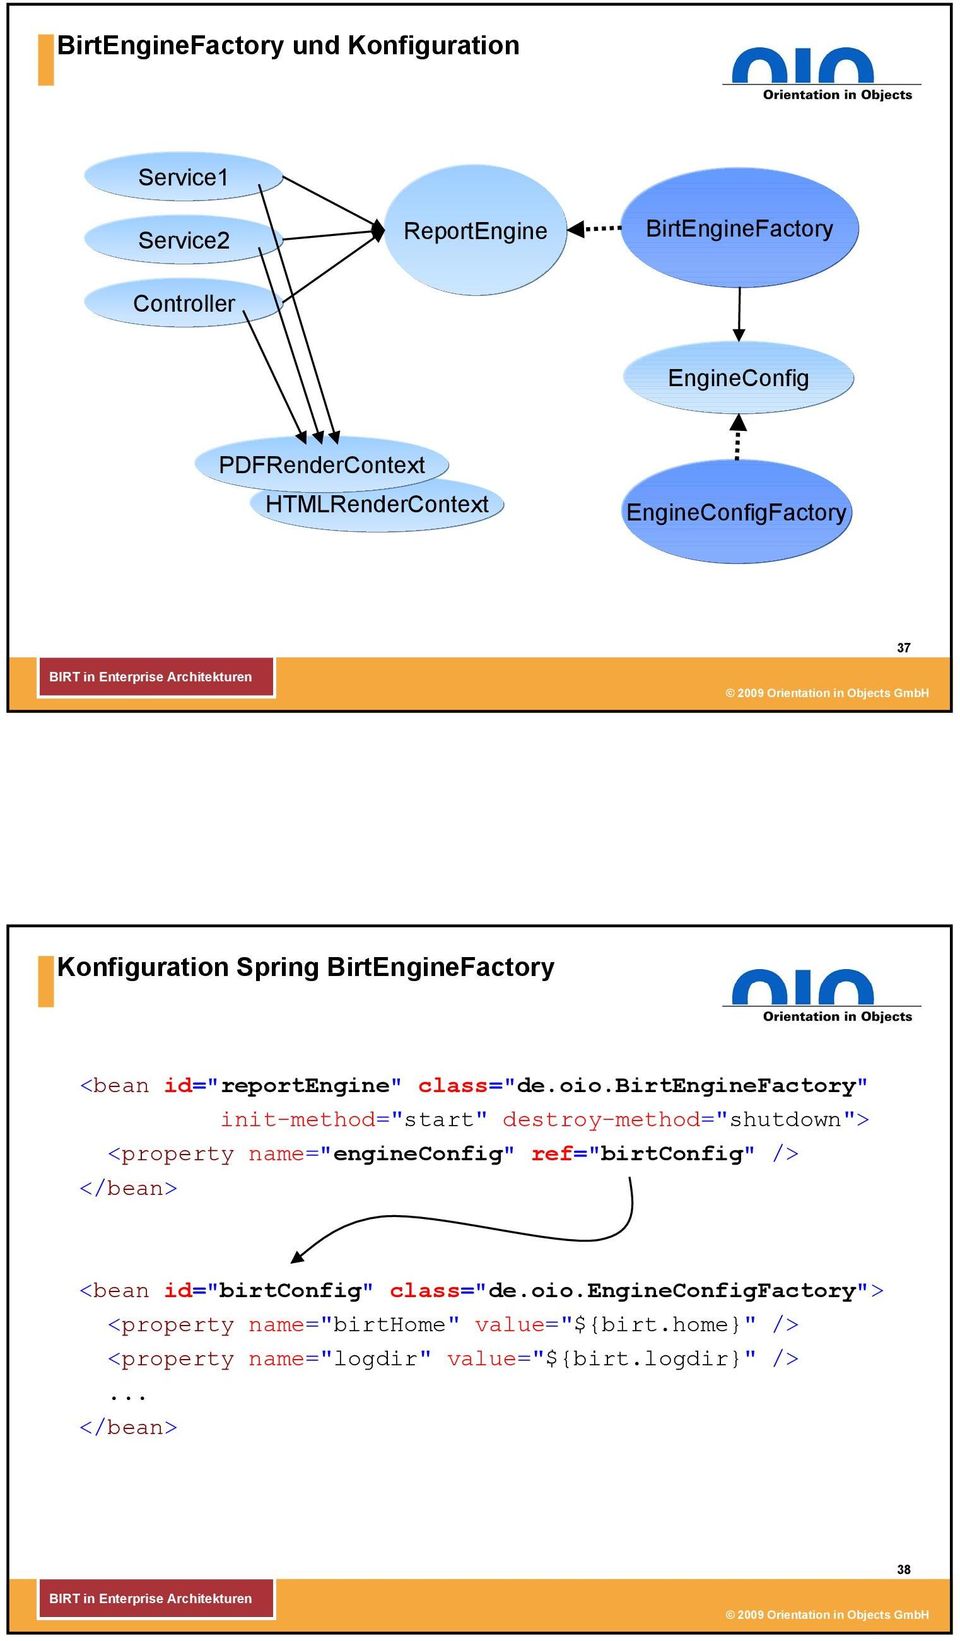 birtenginefactory" init-method="start" destroy-method="shutdown"> <property name="engineconfig" ref="birtconfig" /> </bean> <bean